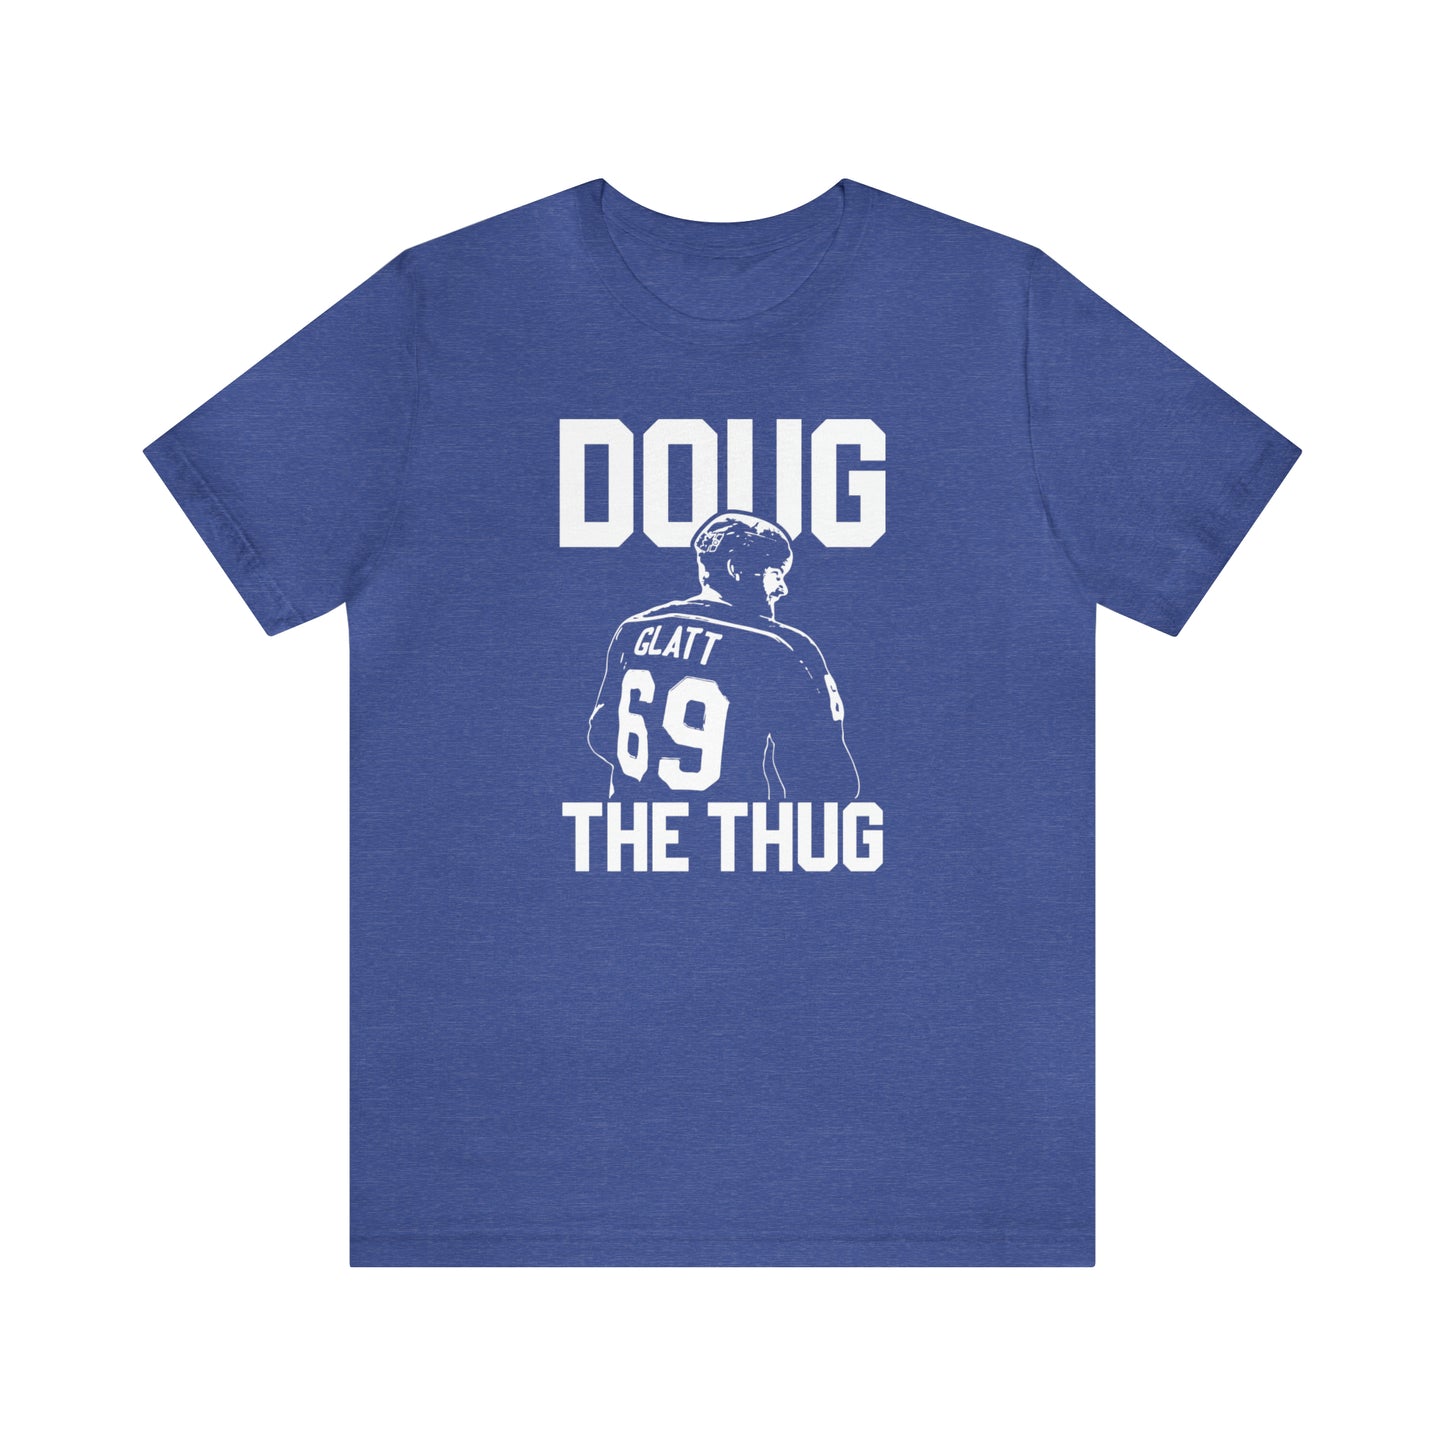 Goon - Doug The Thug Tee